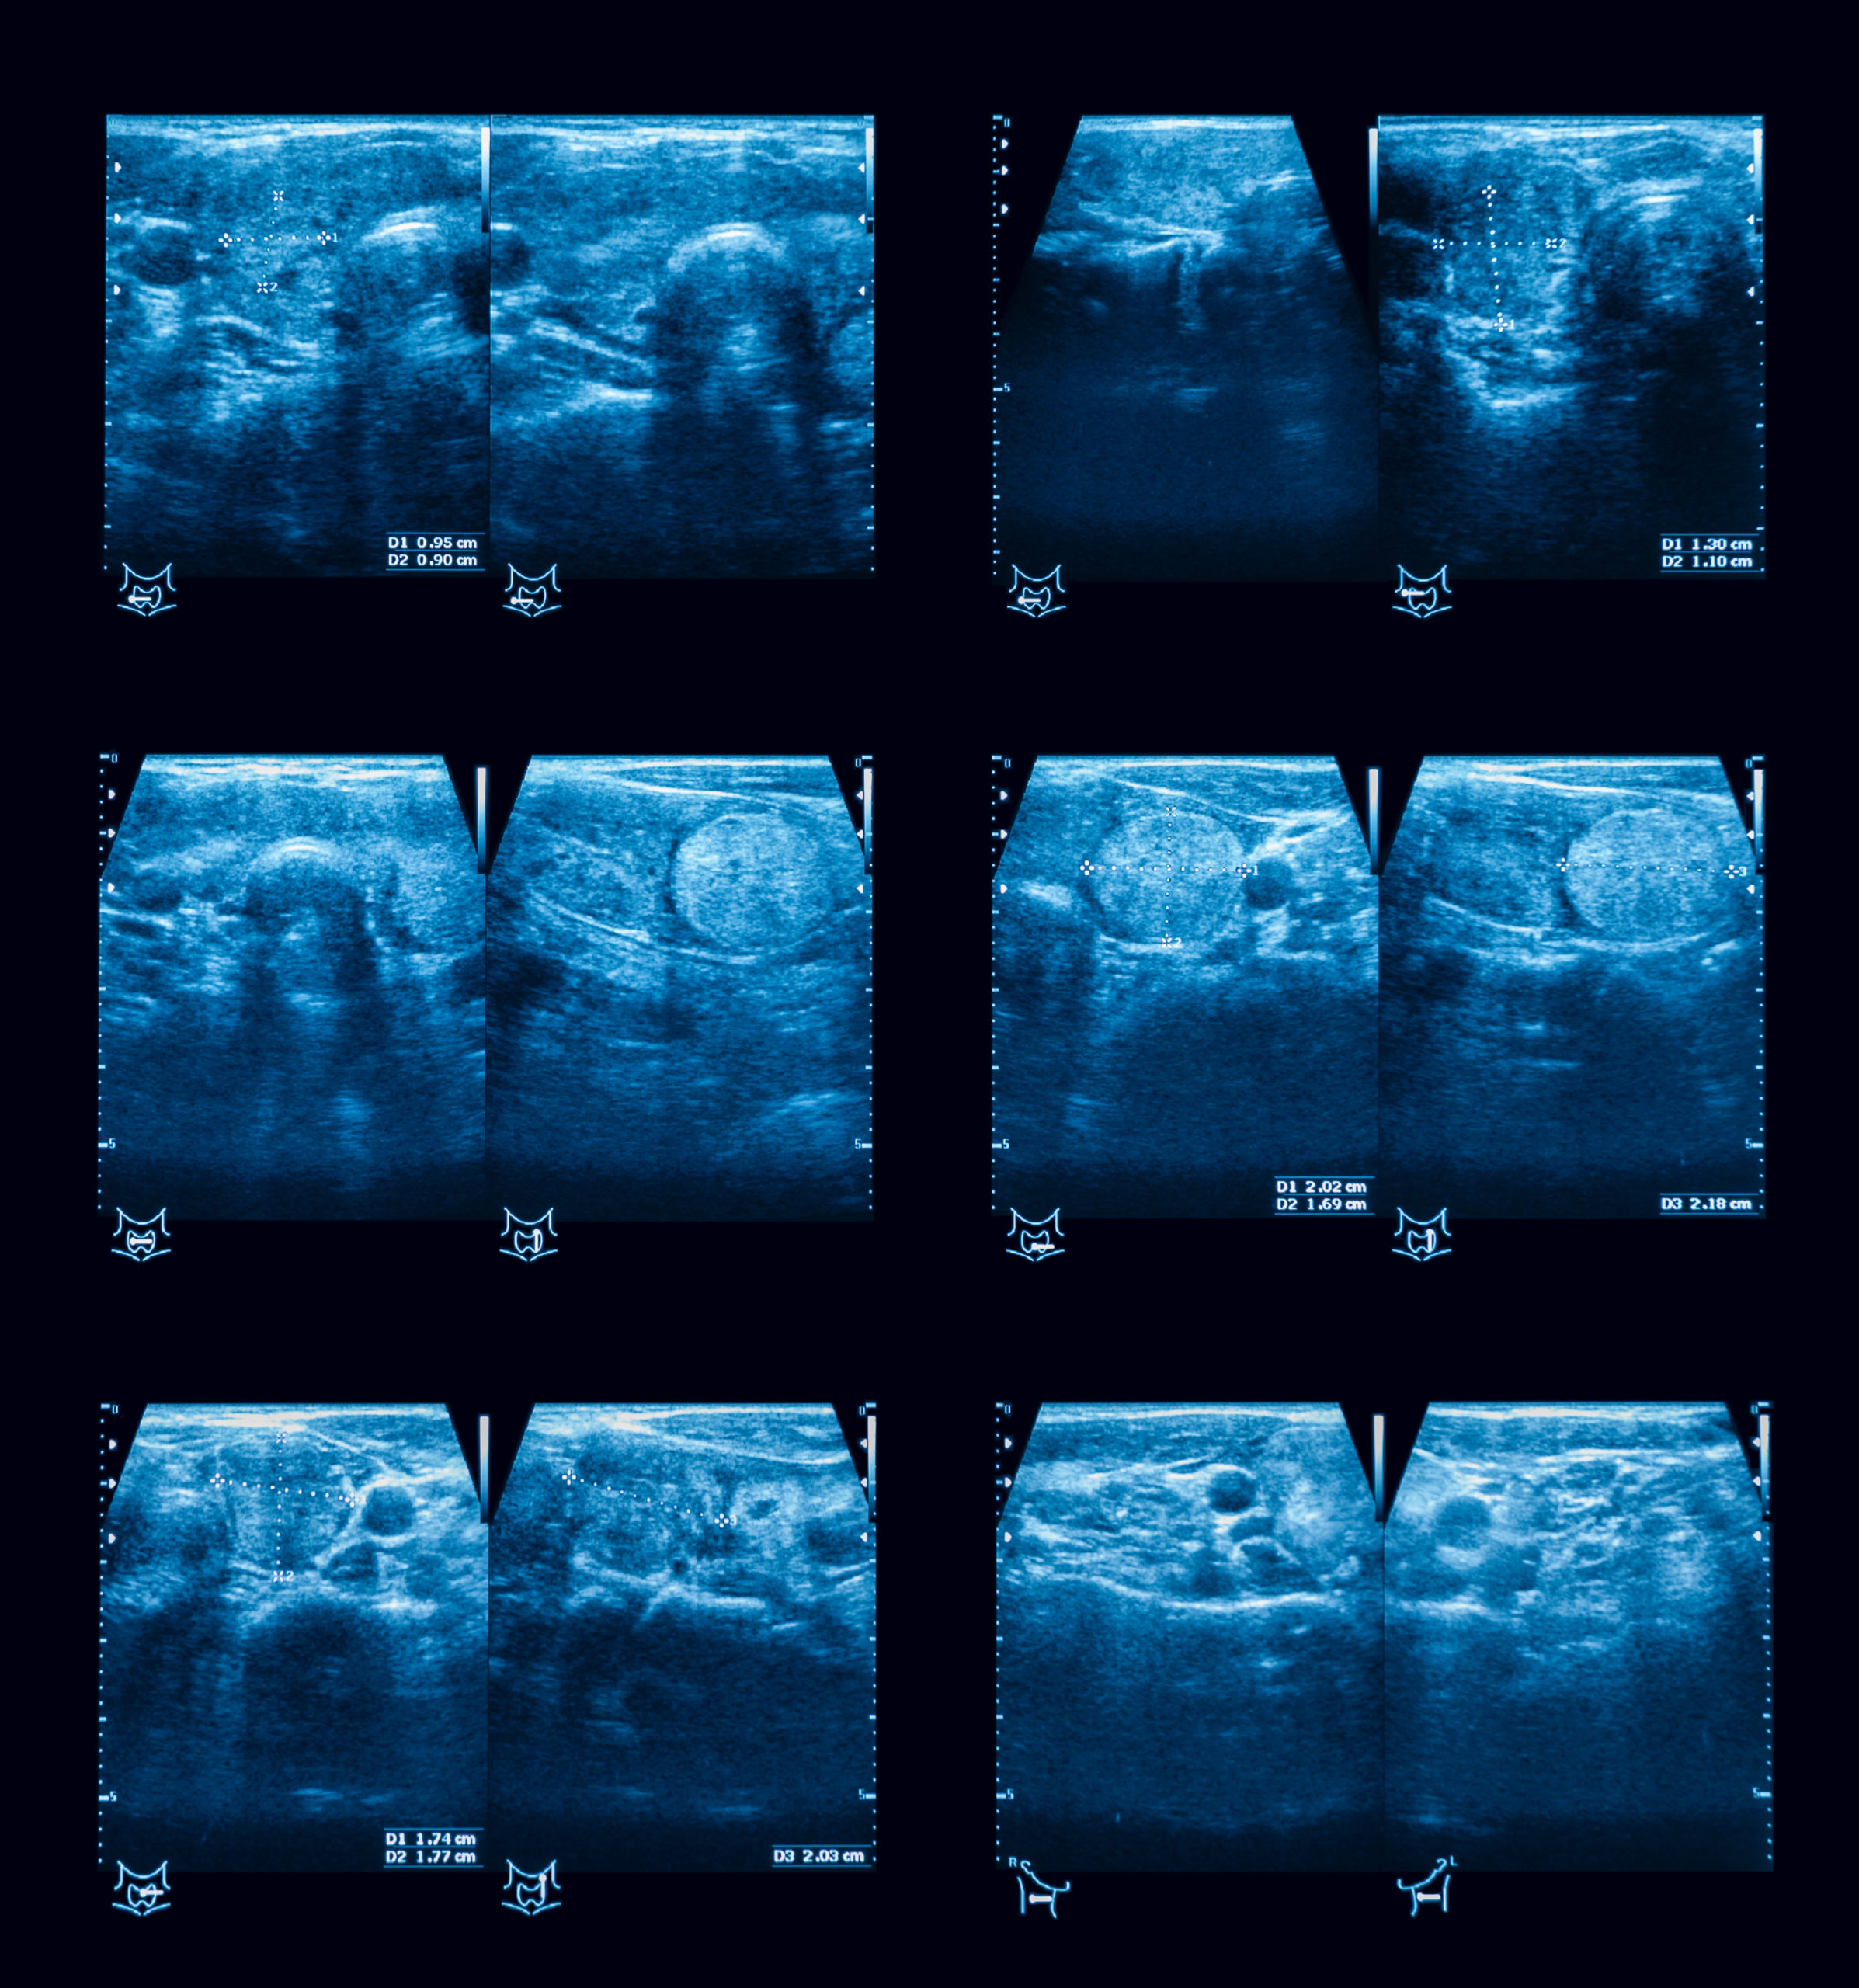 Ultrasound image of a thyroid nodule